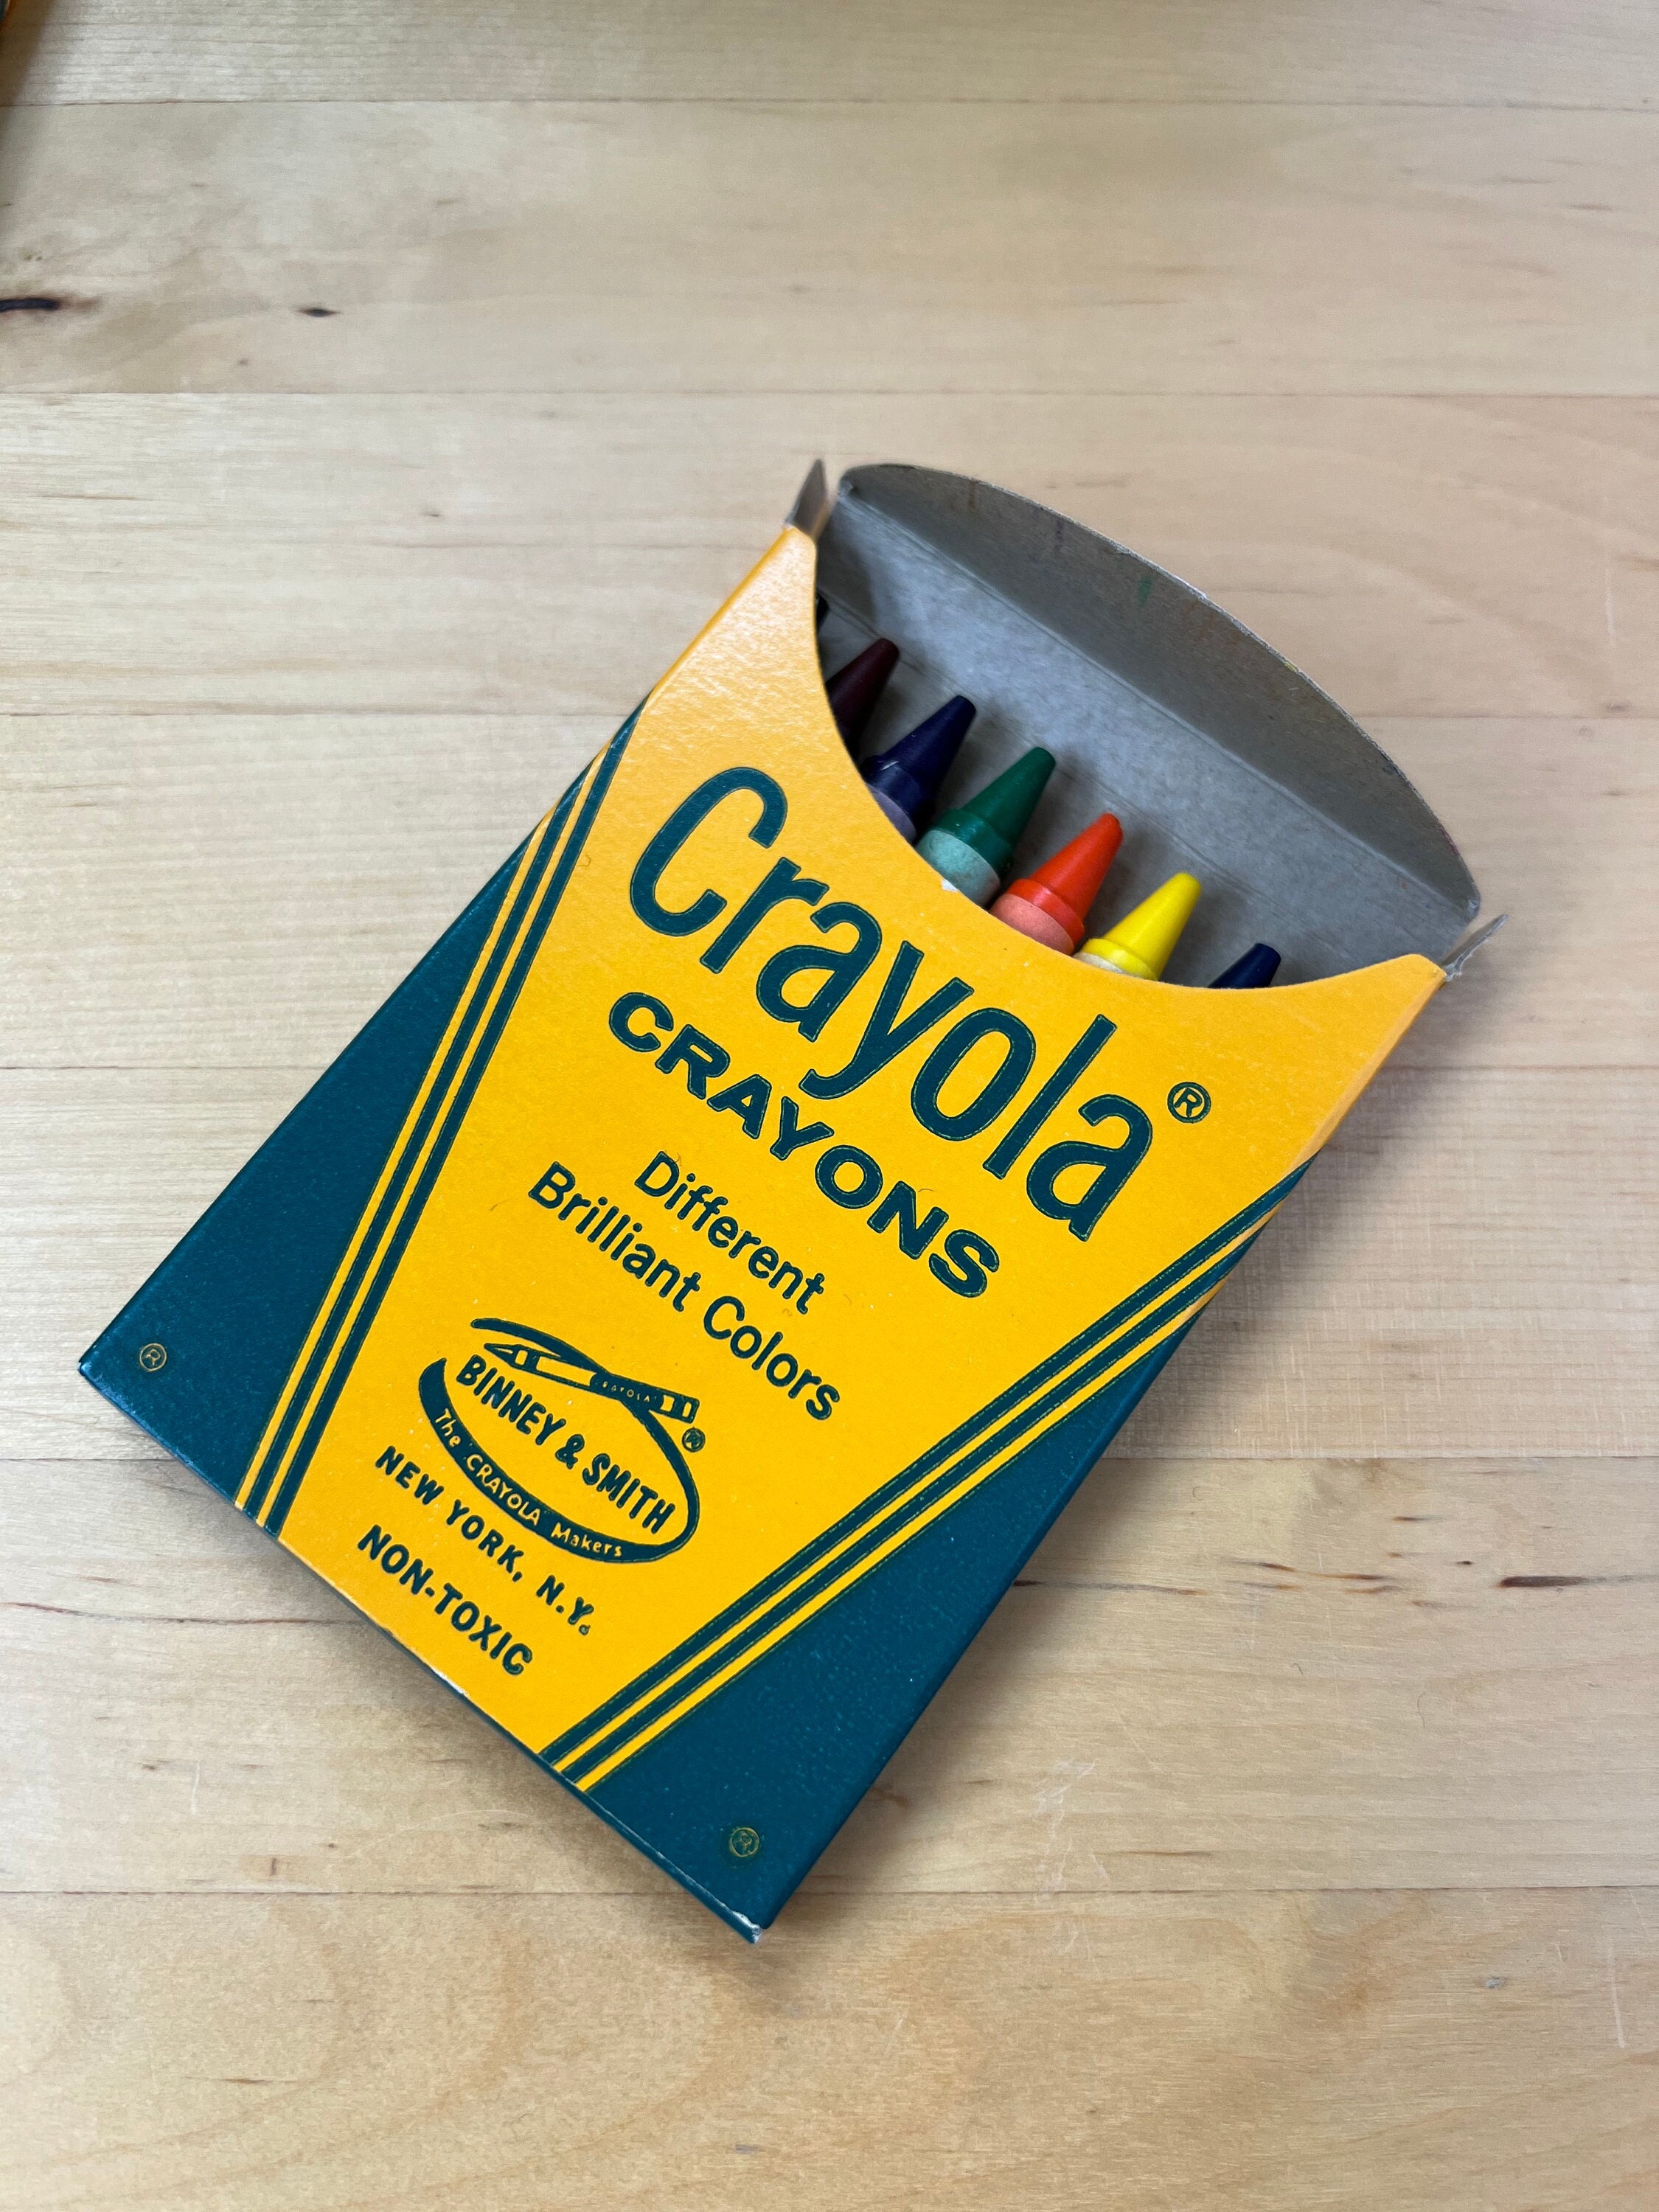 Crayola Crayon Vintage Hard To Find Colors Lot of 10 Unused Binney & Smith